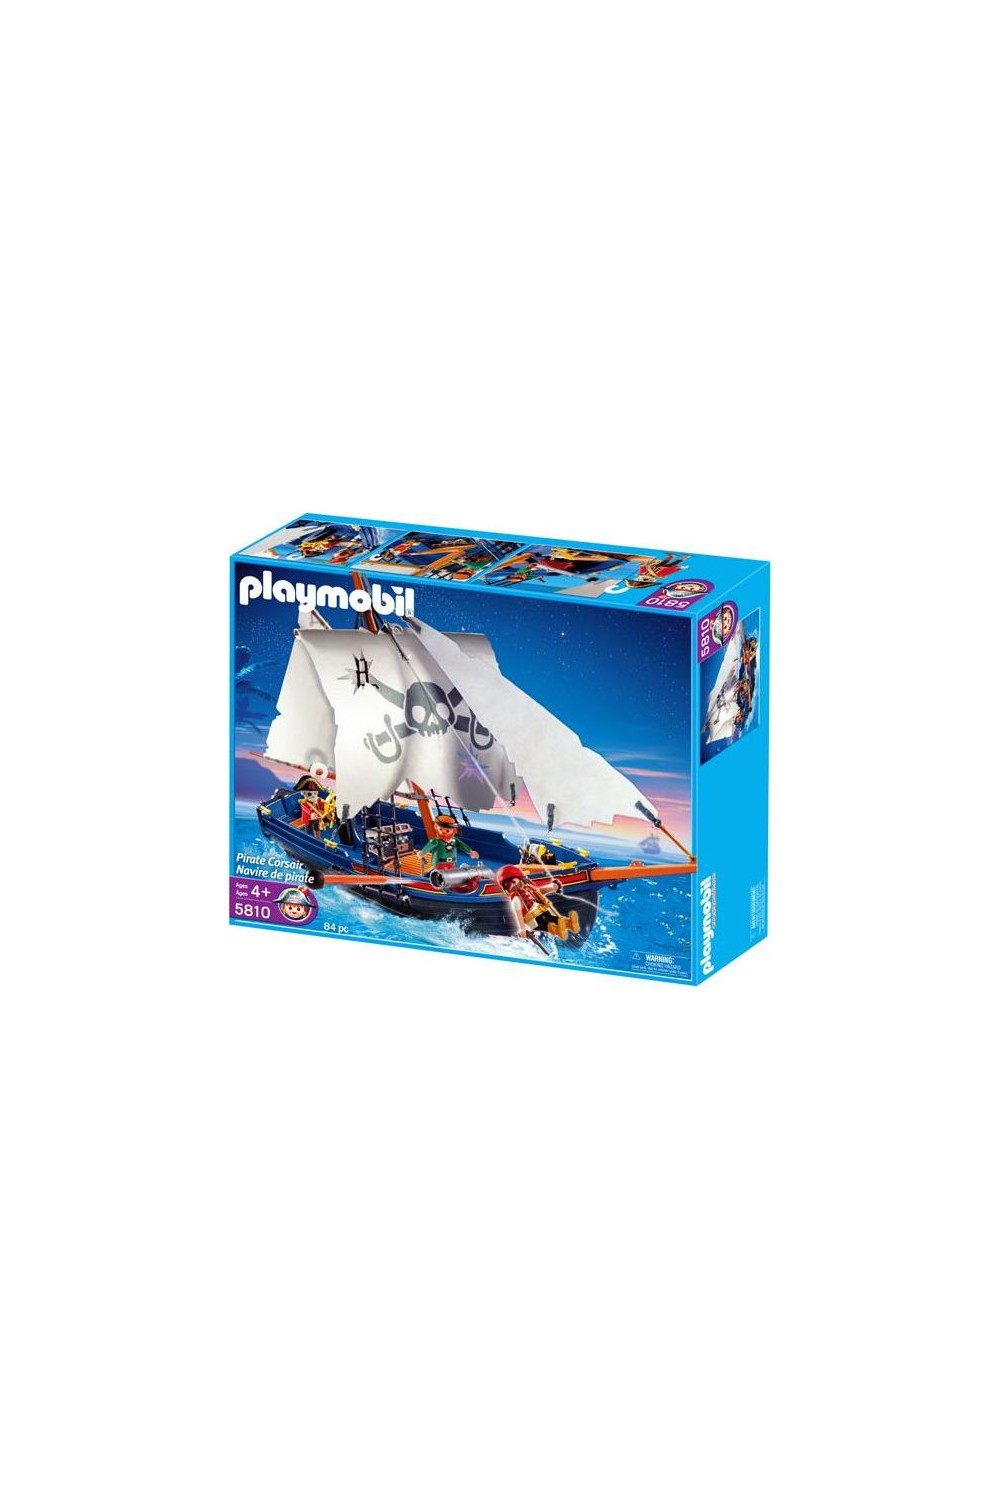 Playmobil - Playmobil Κουρσάρικη Σκούνα 5810